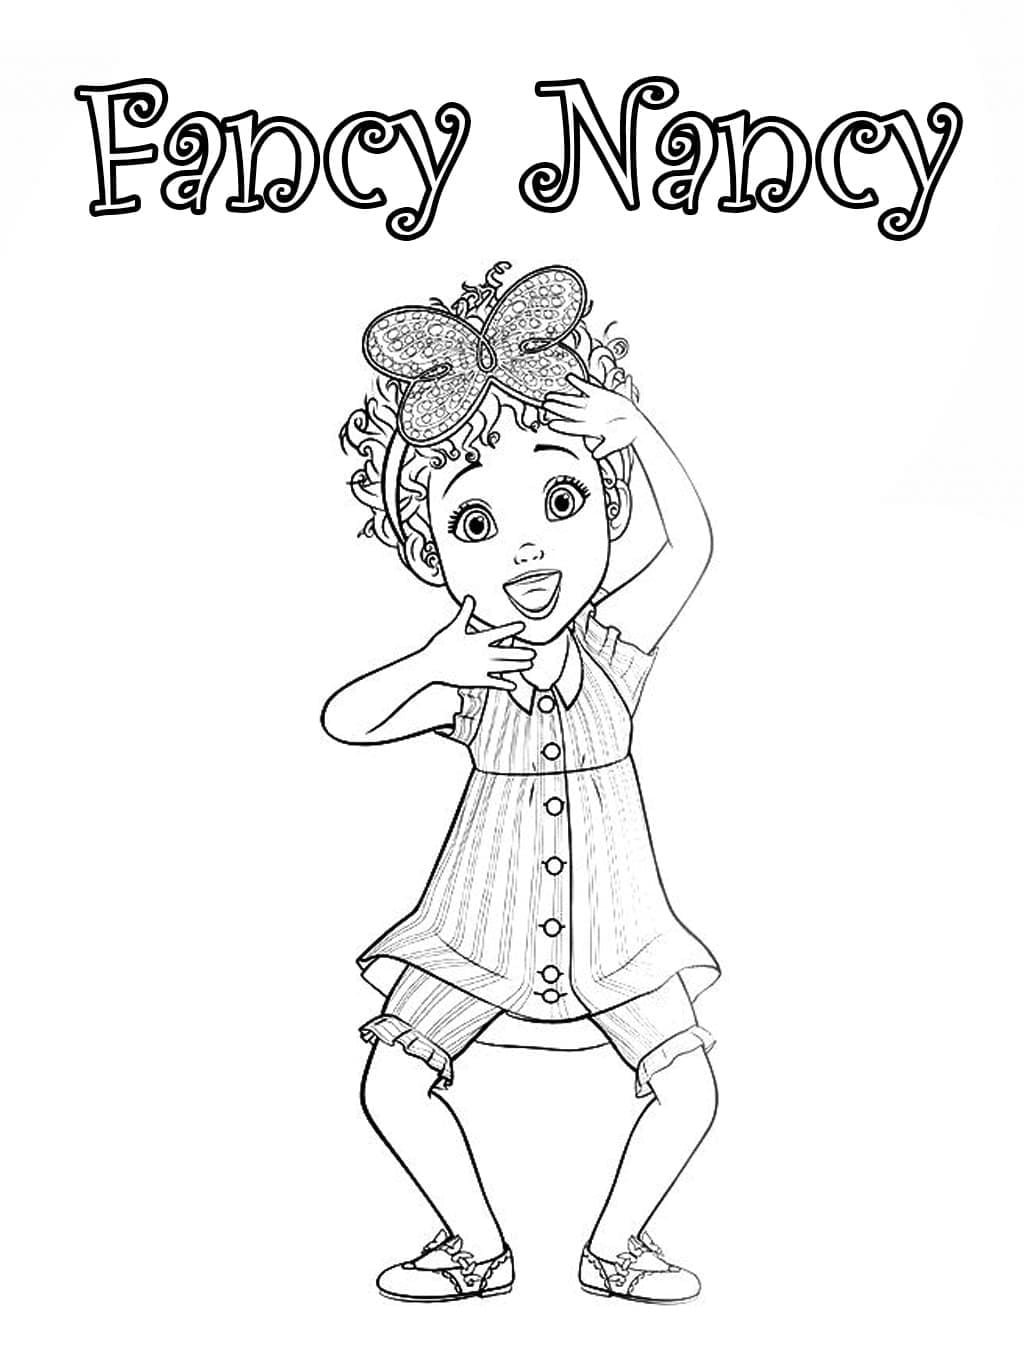 Fancy Nancy en Pyjama coloring page